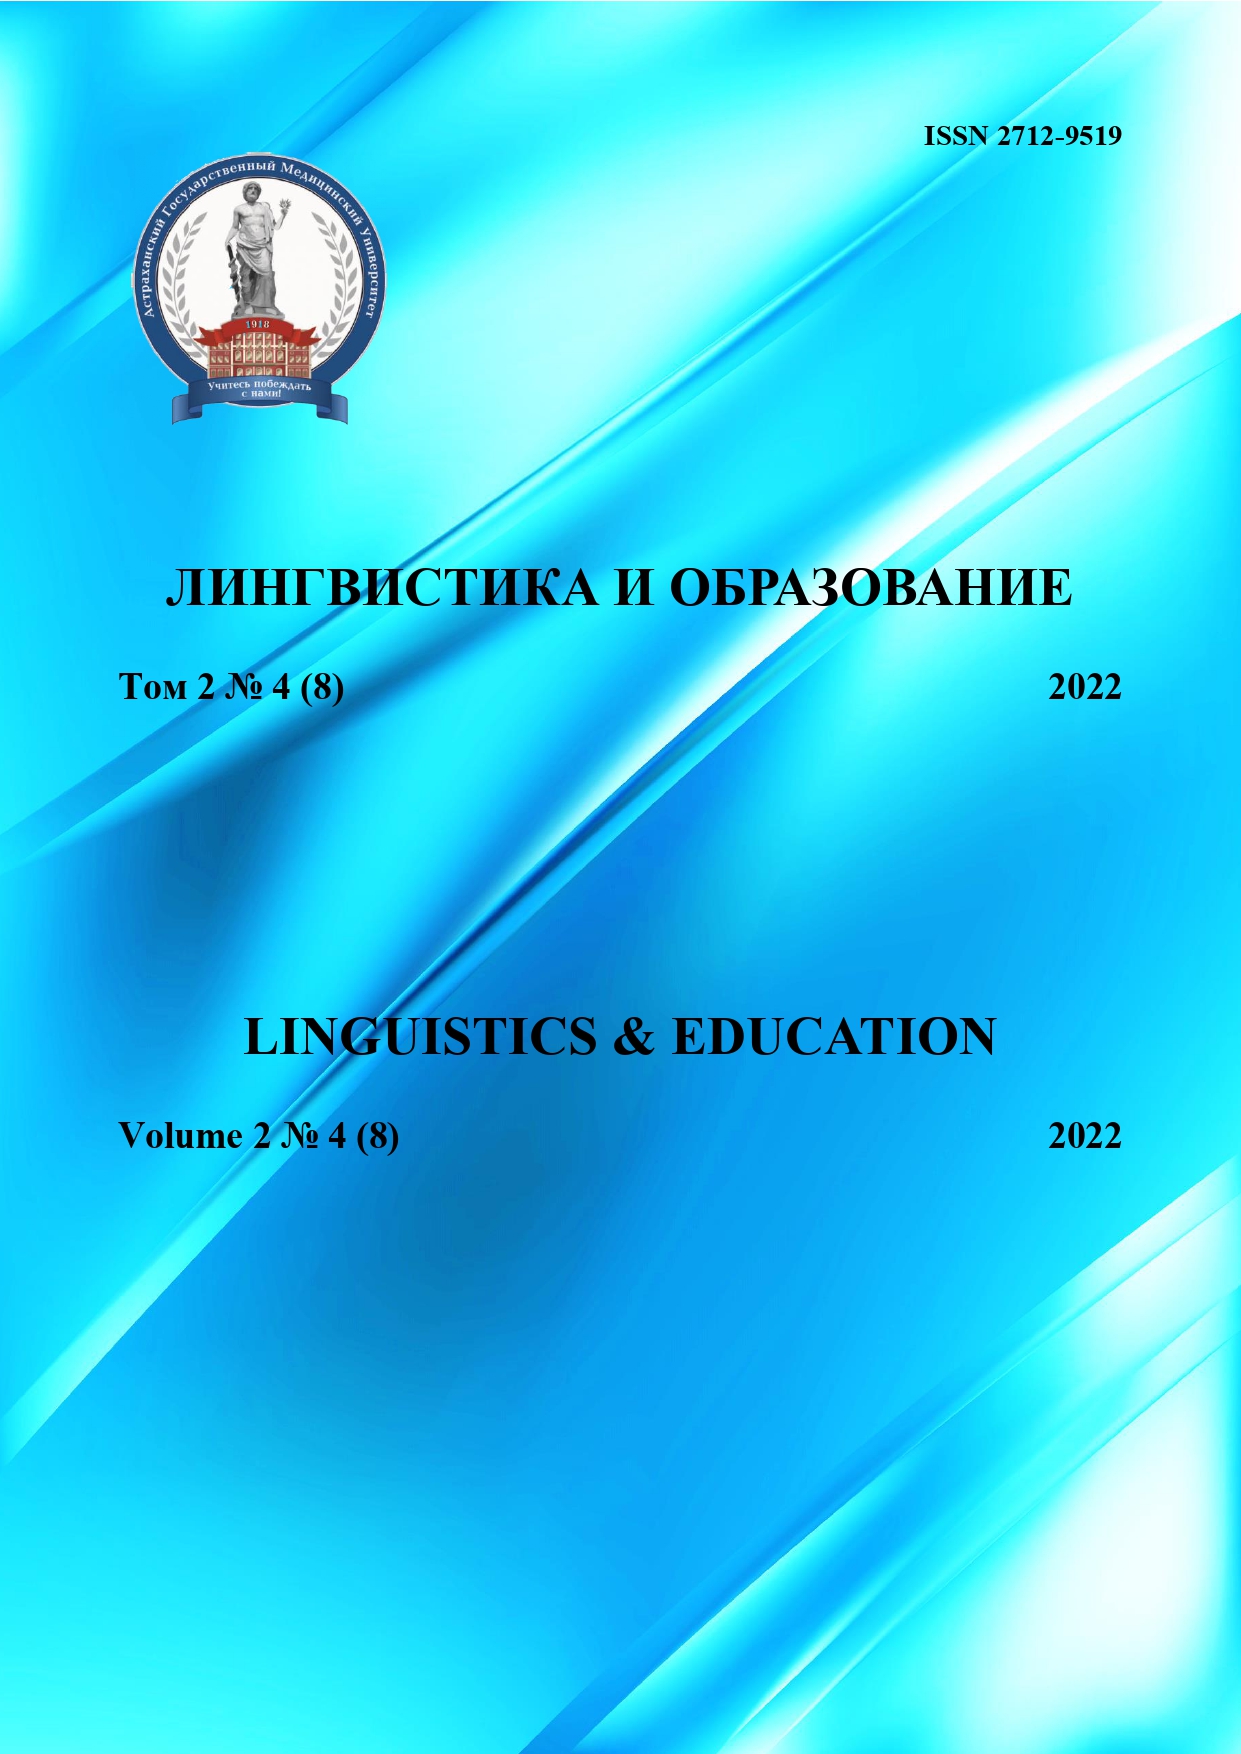                         Linguistics & Education
            